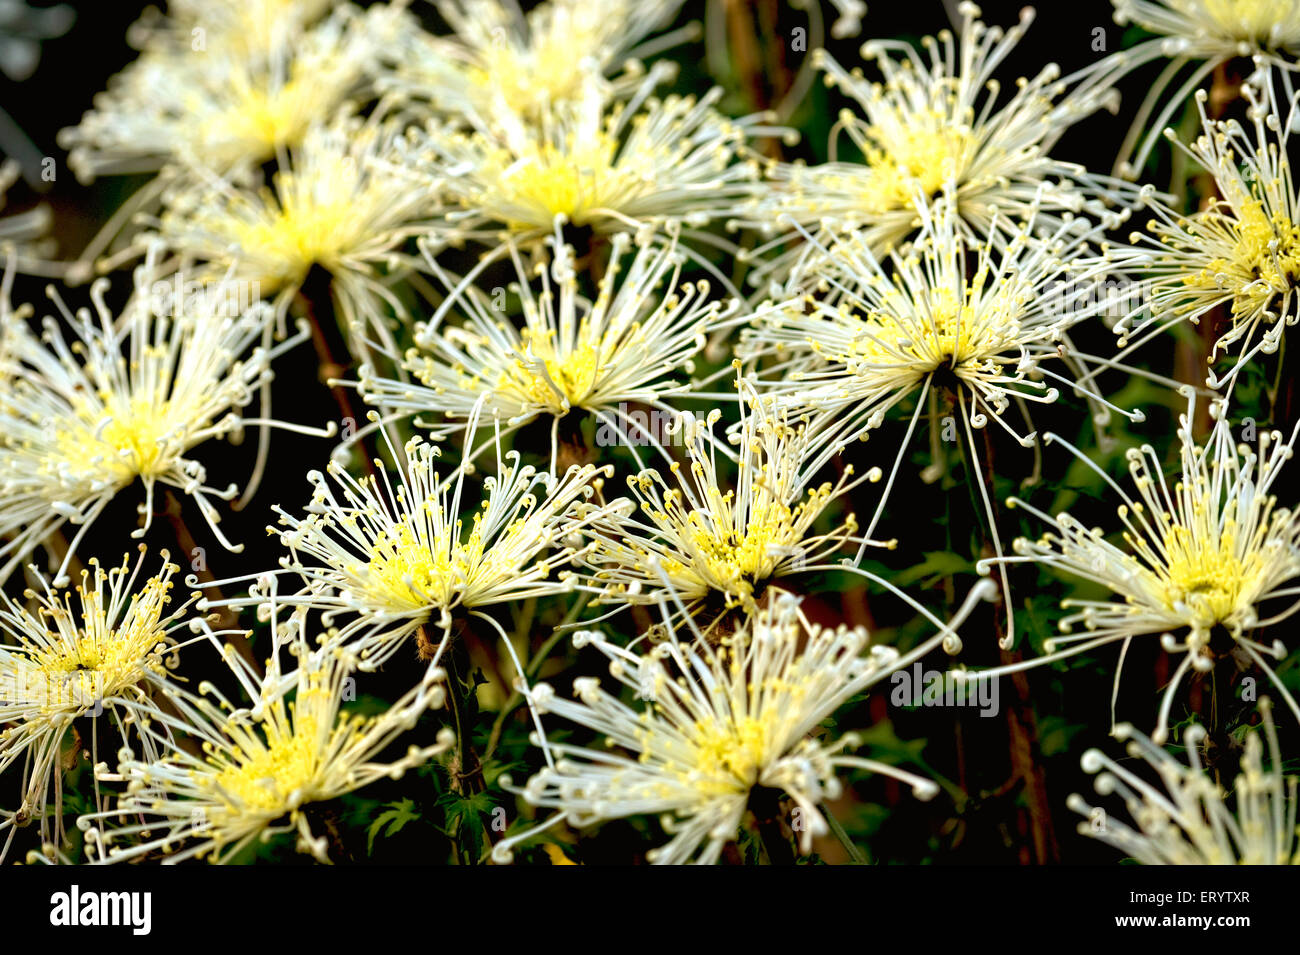 Spider Chrysanthemum flower Stock Photo